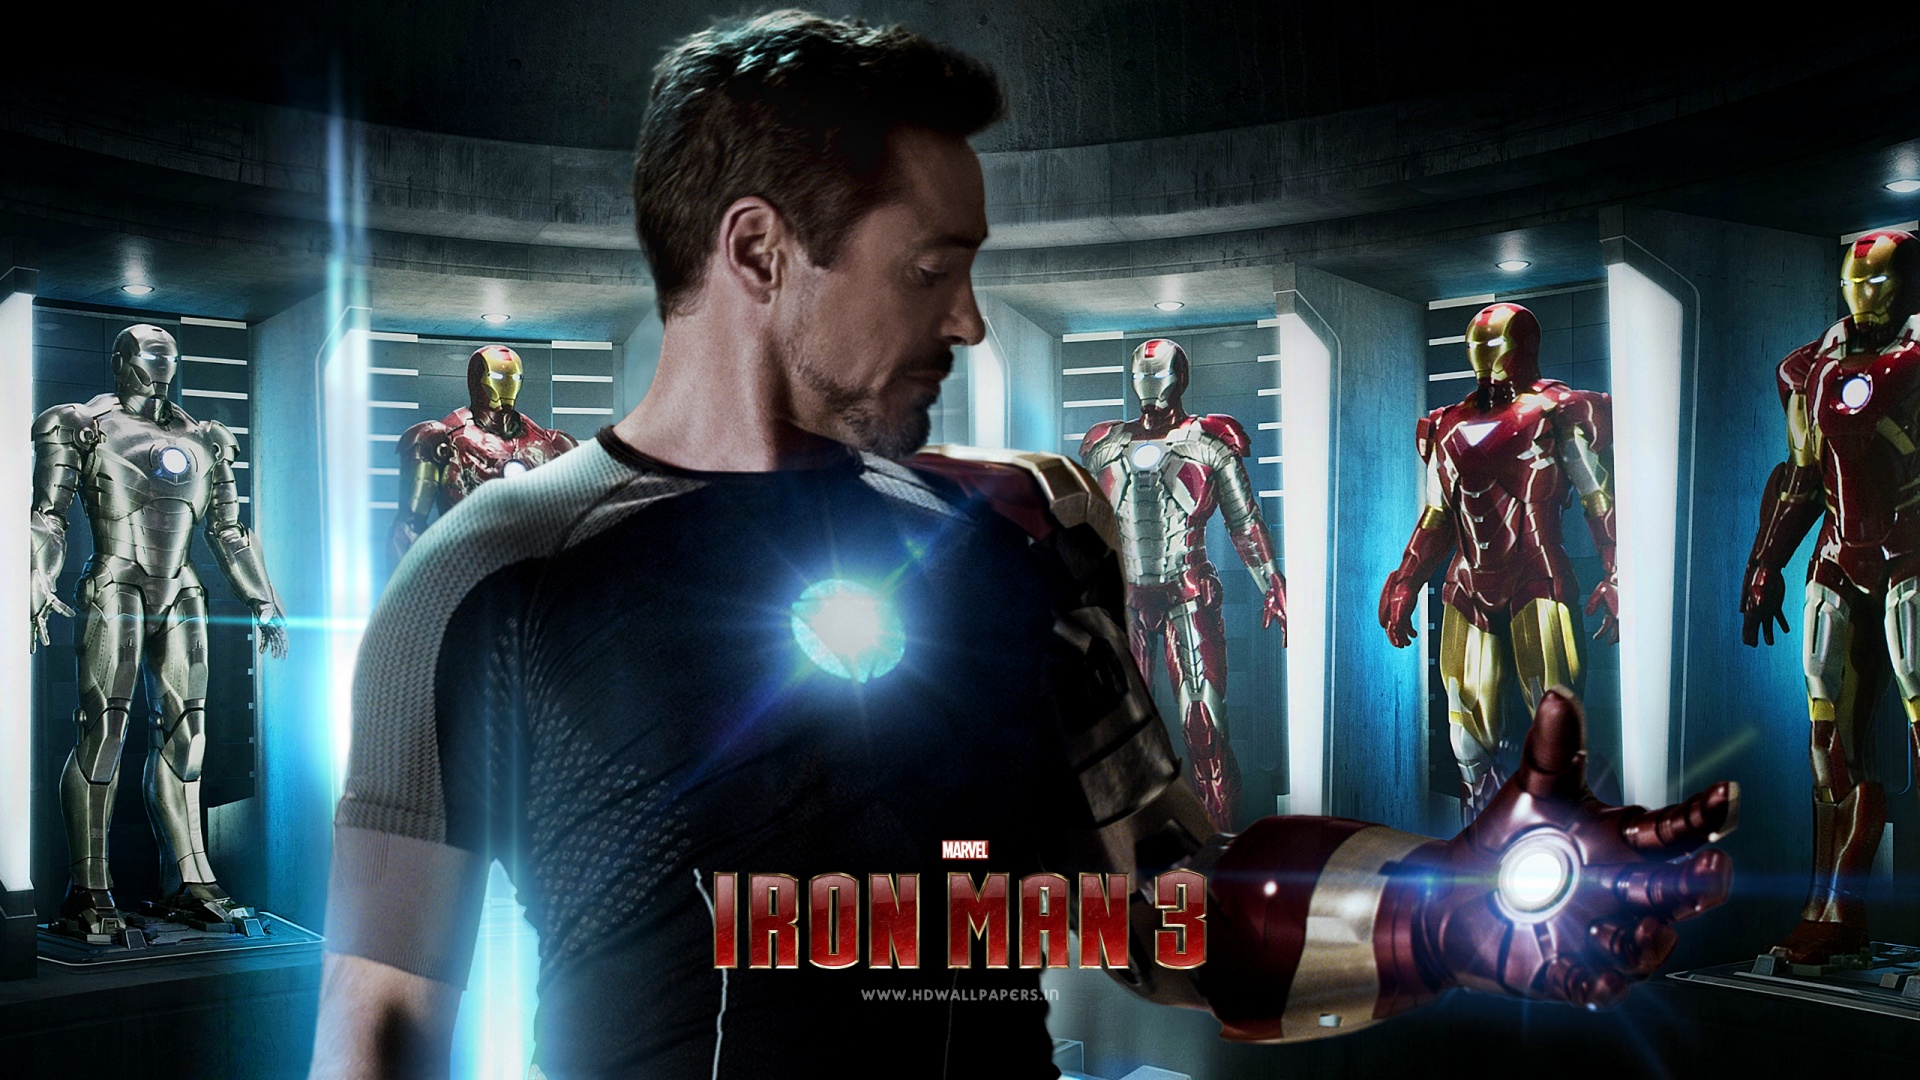 Iron Man 3 High Quality Wallpapers Movies Wallpaper - Semrawut